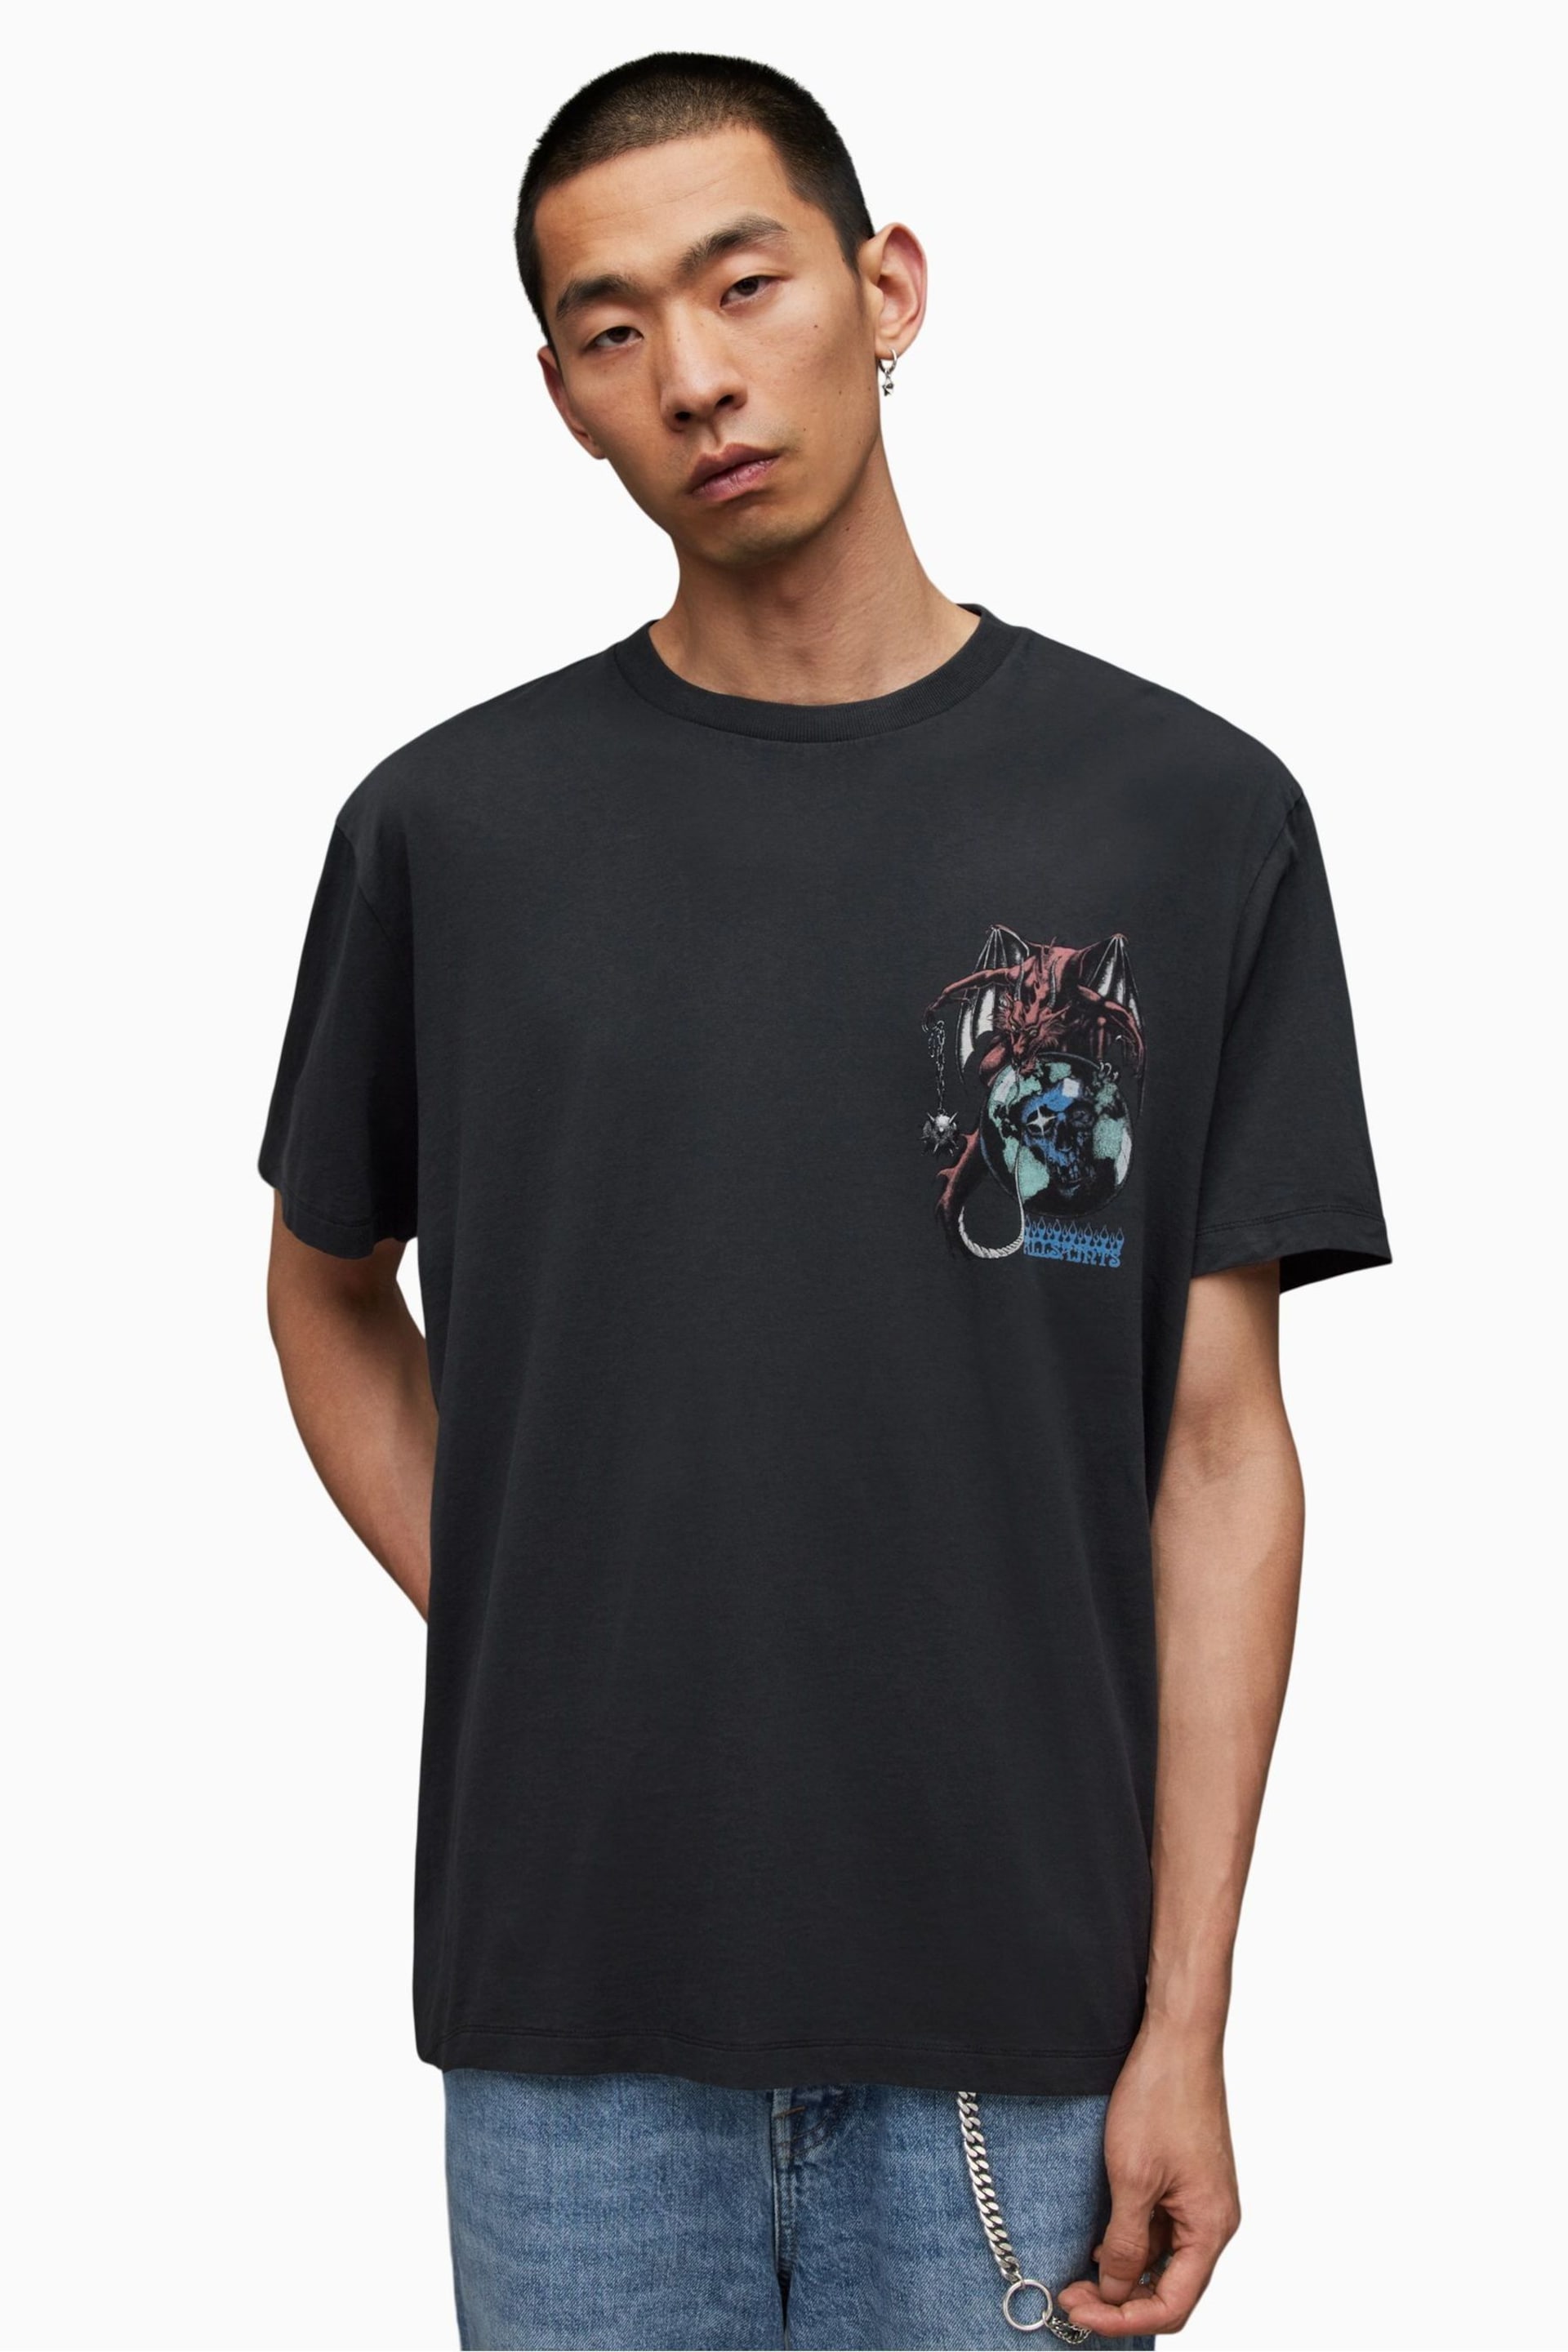 AllSaints Black Space Dragon Crew T-Shirt - Image 1 of 6